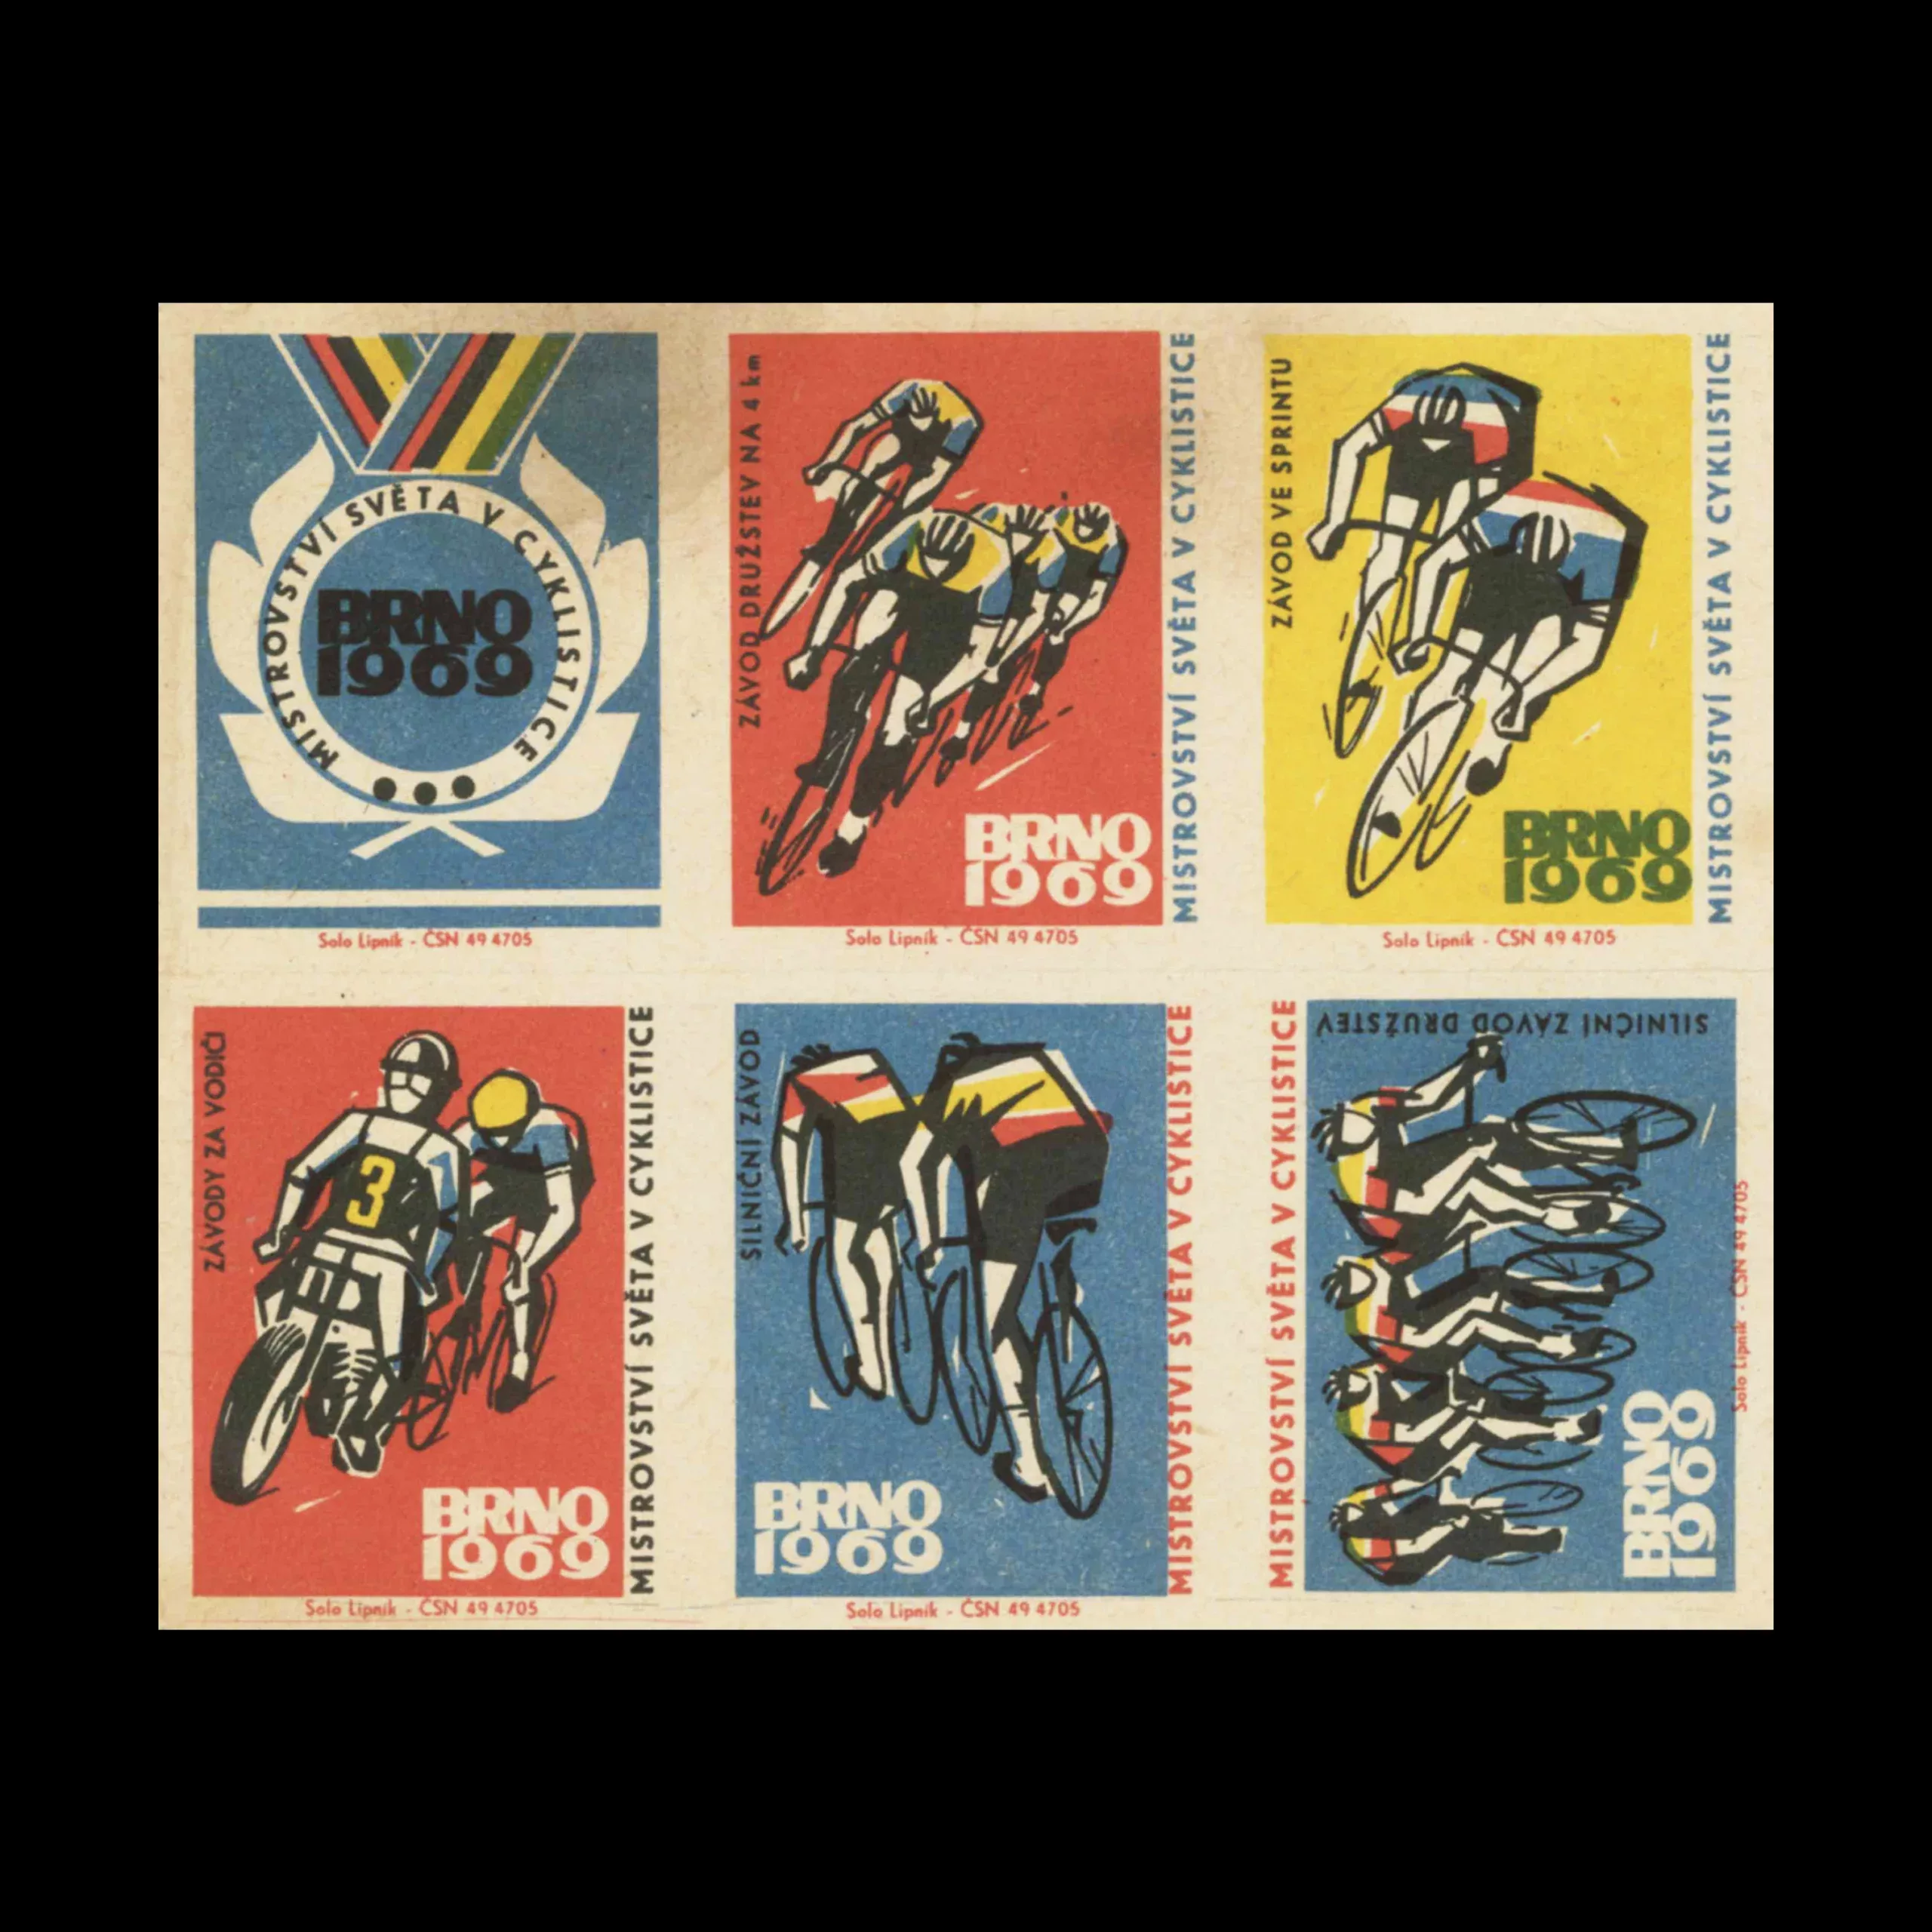 Brno, World Championship for Track cycling, 1969, Czechoslovakia Matchbox Label Set